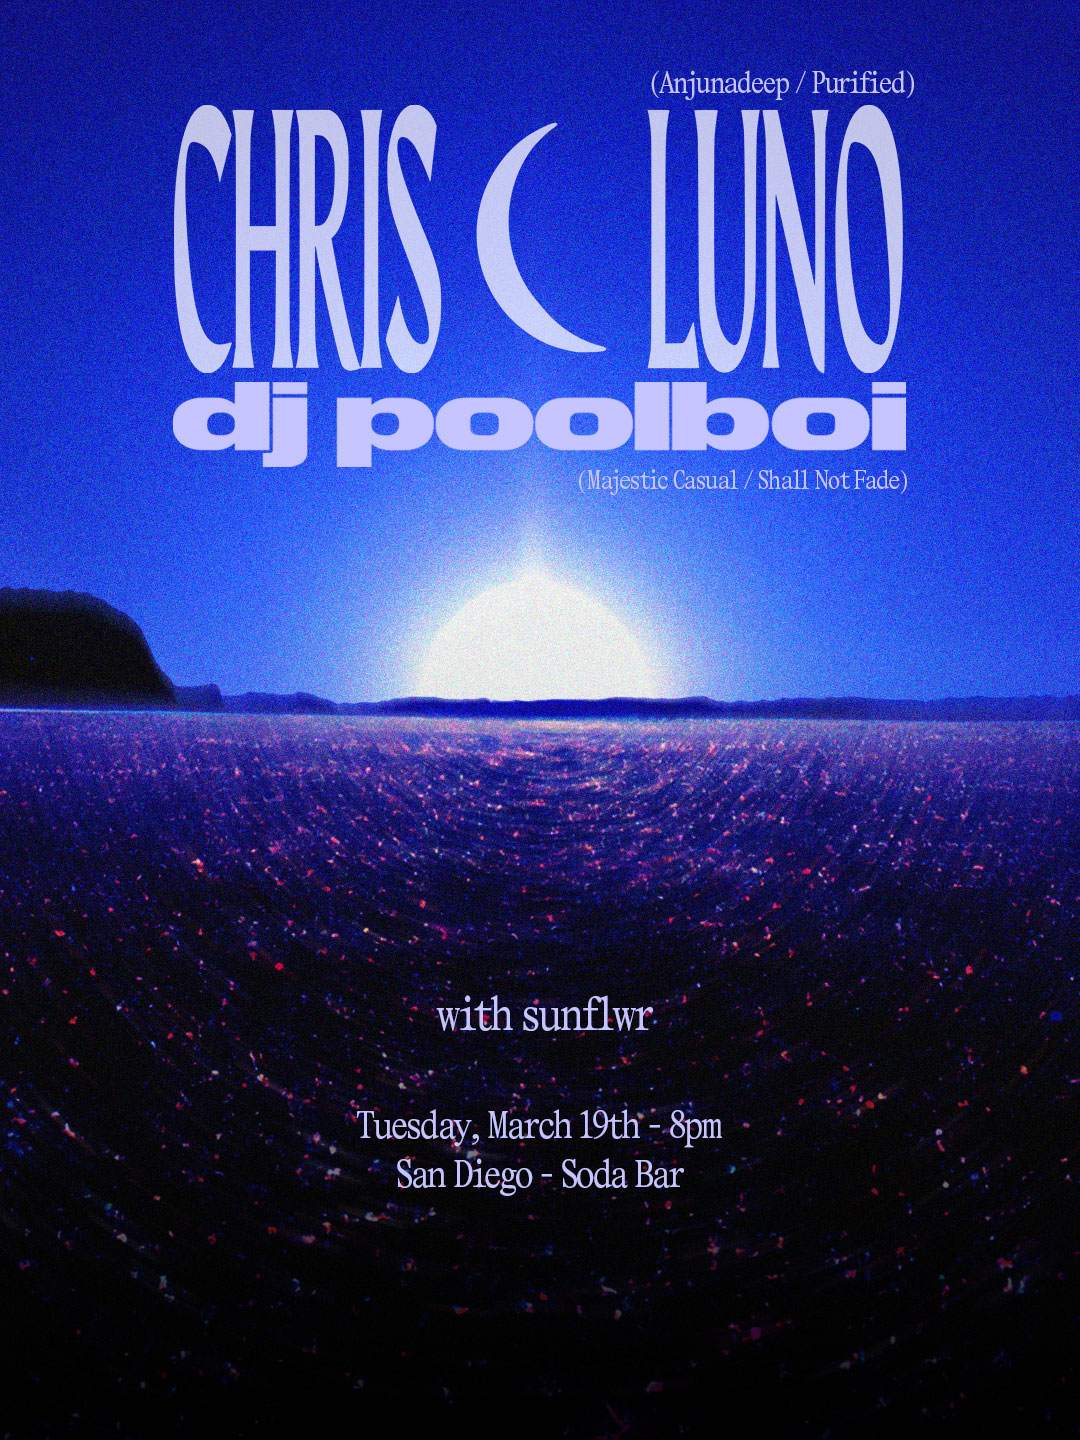 Chris Luno (Anjunadeep), dj poolboi (Majestic Casual) & sunflwr - Página trasera